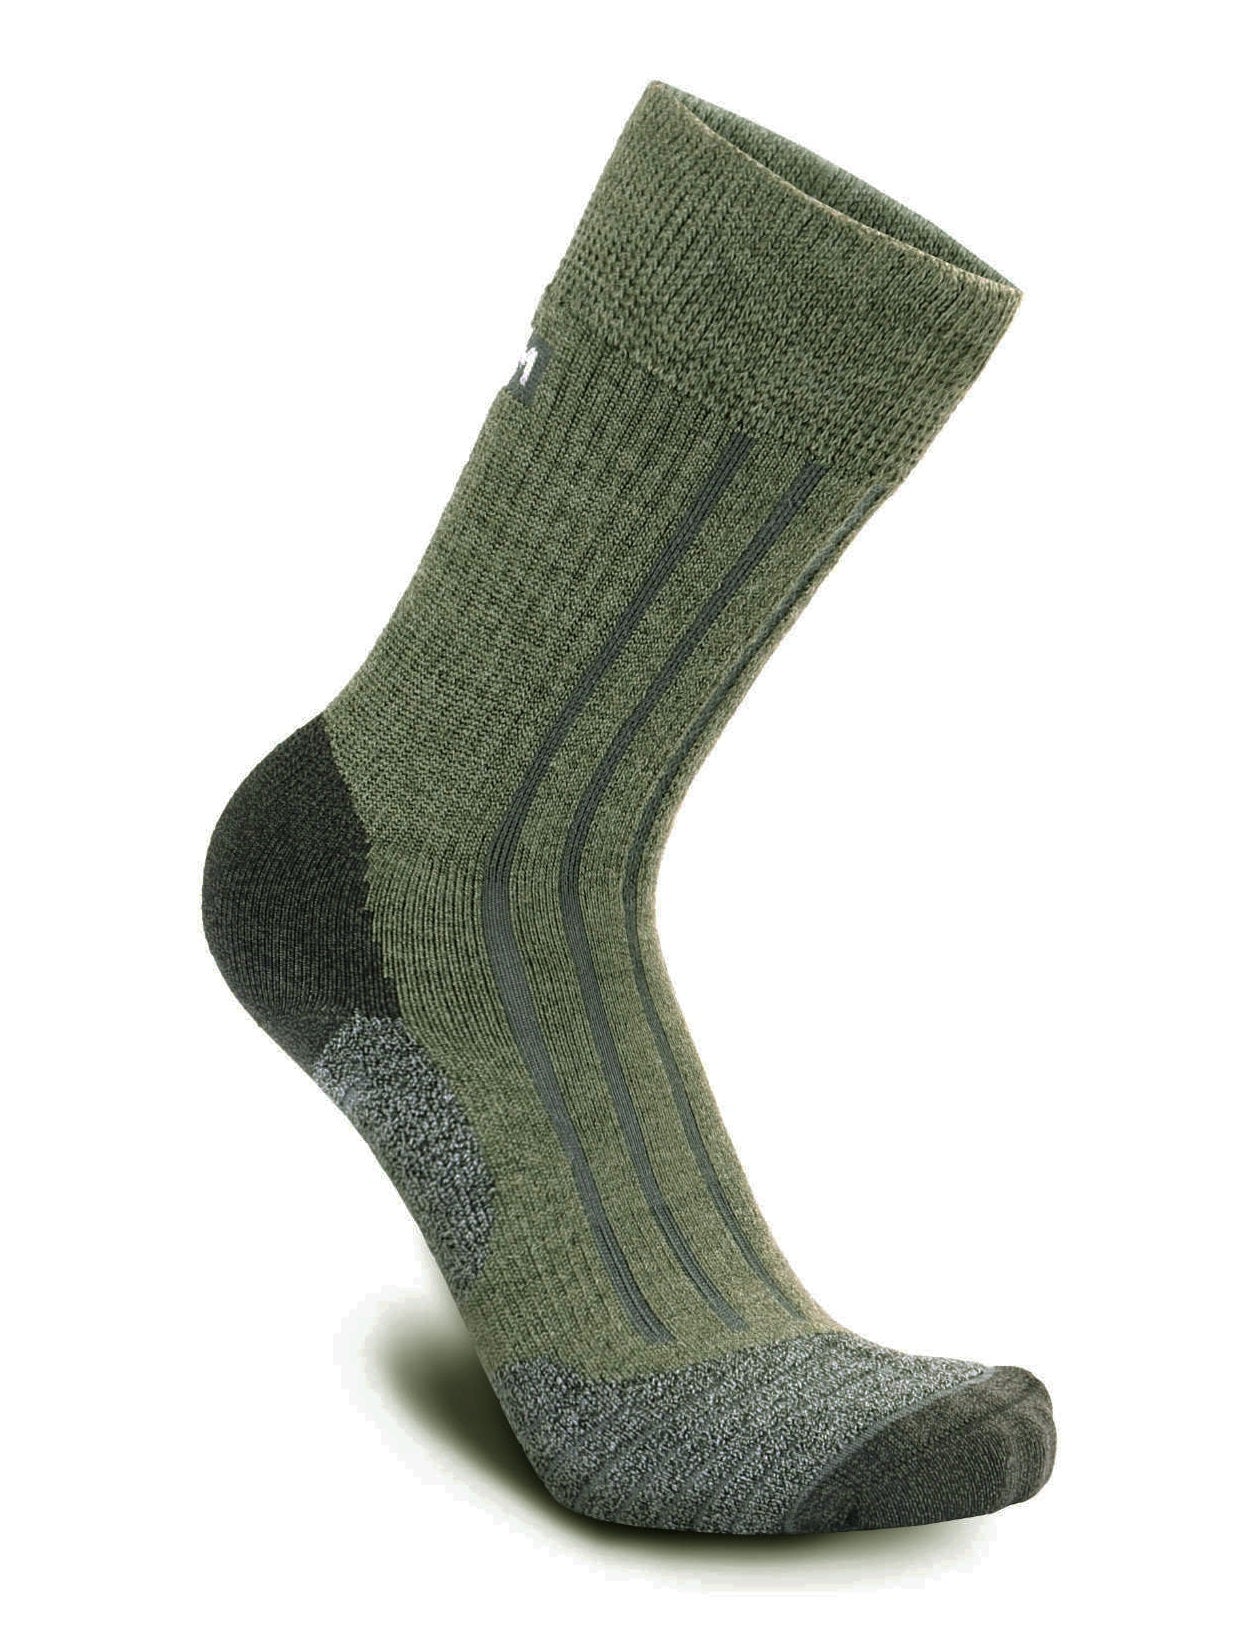 MEINDL MT Hunting Socks - Merino Wool - Loden